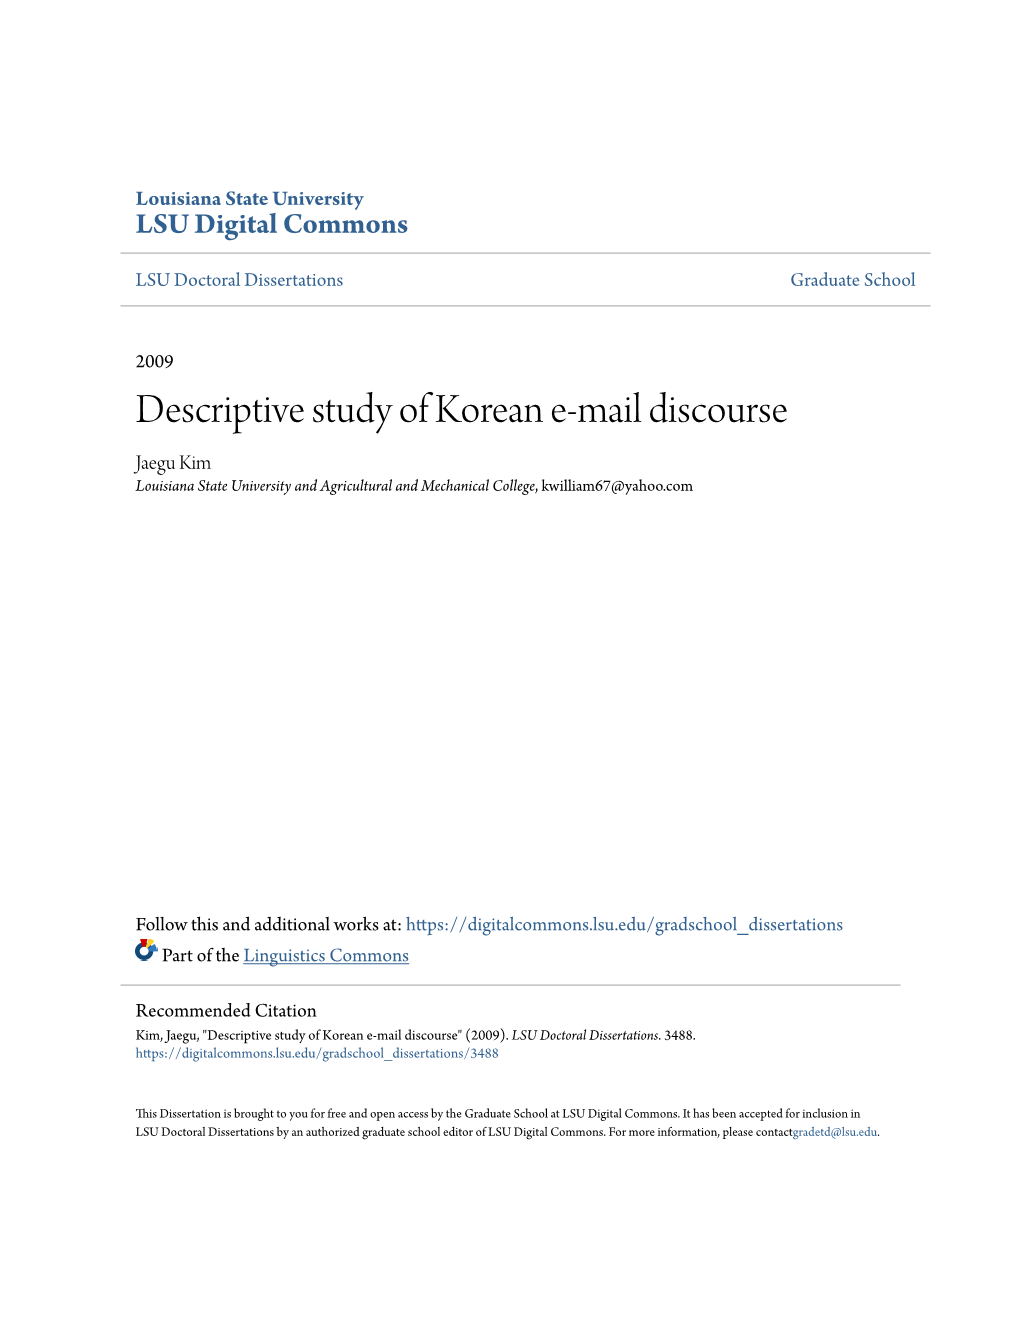 Descriptive Study of Korean E-Mail Discourse Jaegu Kim Louisiana State University and Agricultural and Mechanical College, Kwilliam67@Yahoo.Com